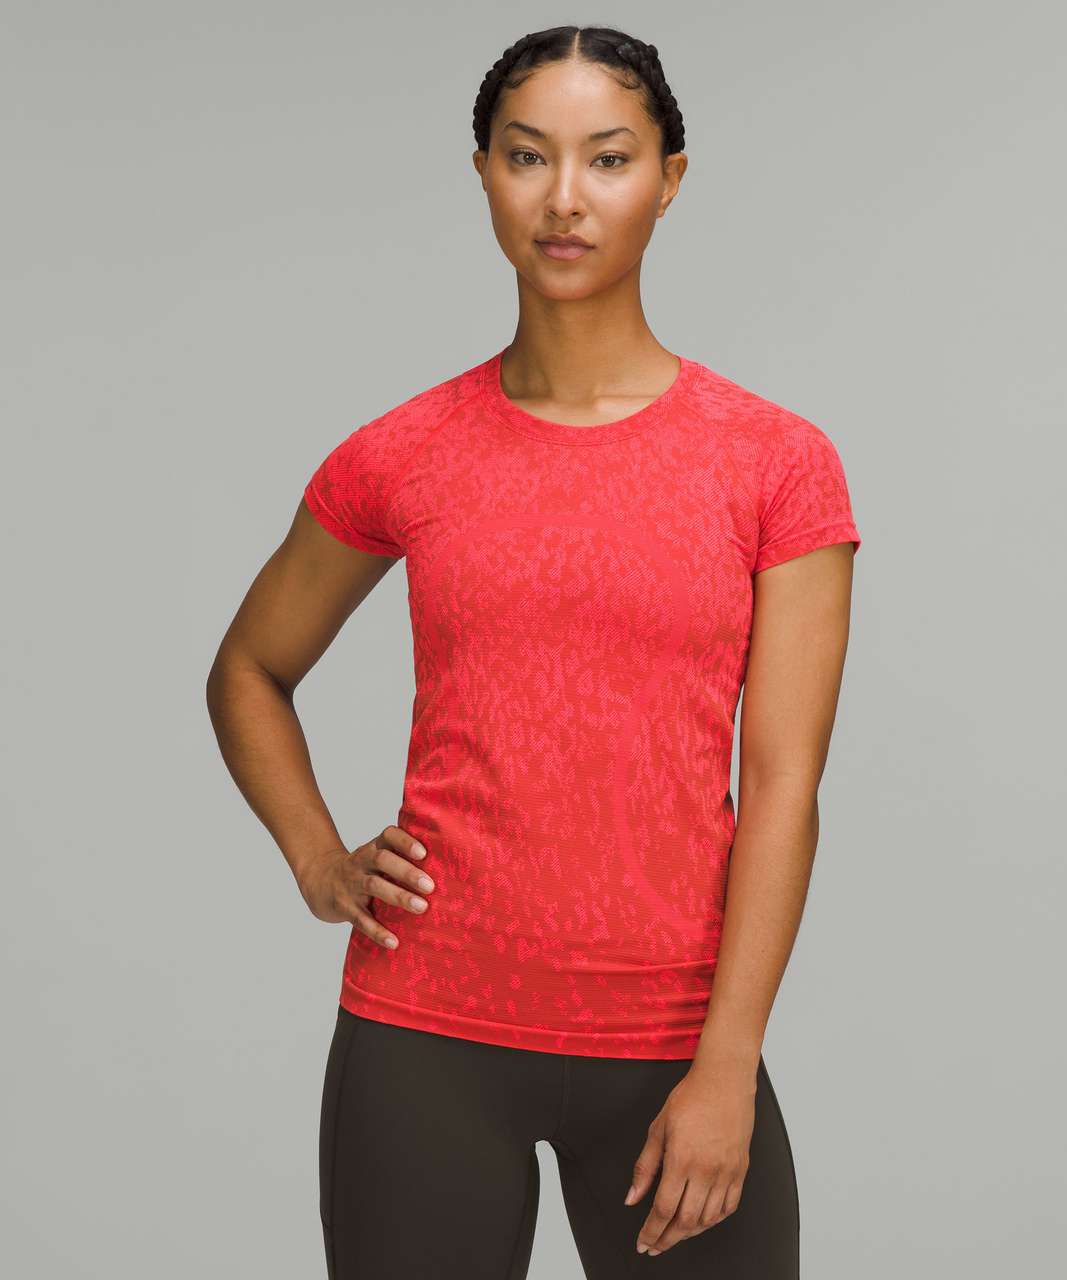 Lululemon Swiftly Tech Short Sleeve Shirt 2.0 - Covered Camo Red Rock / Flare